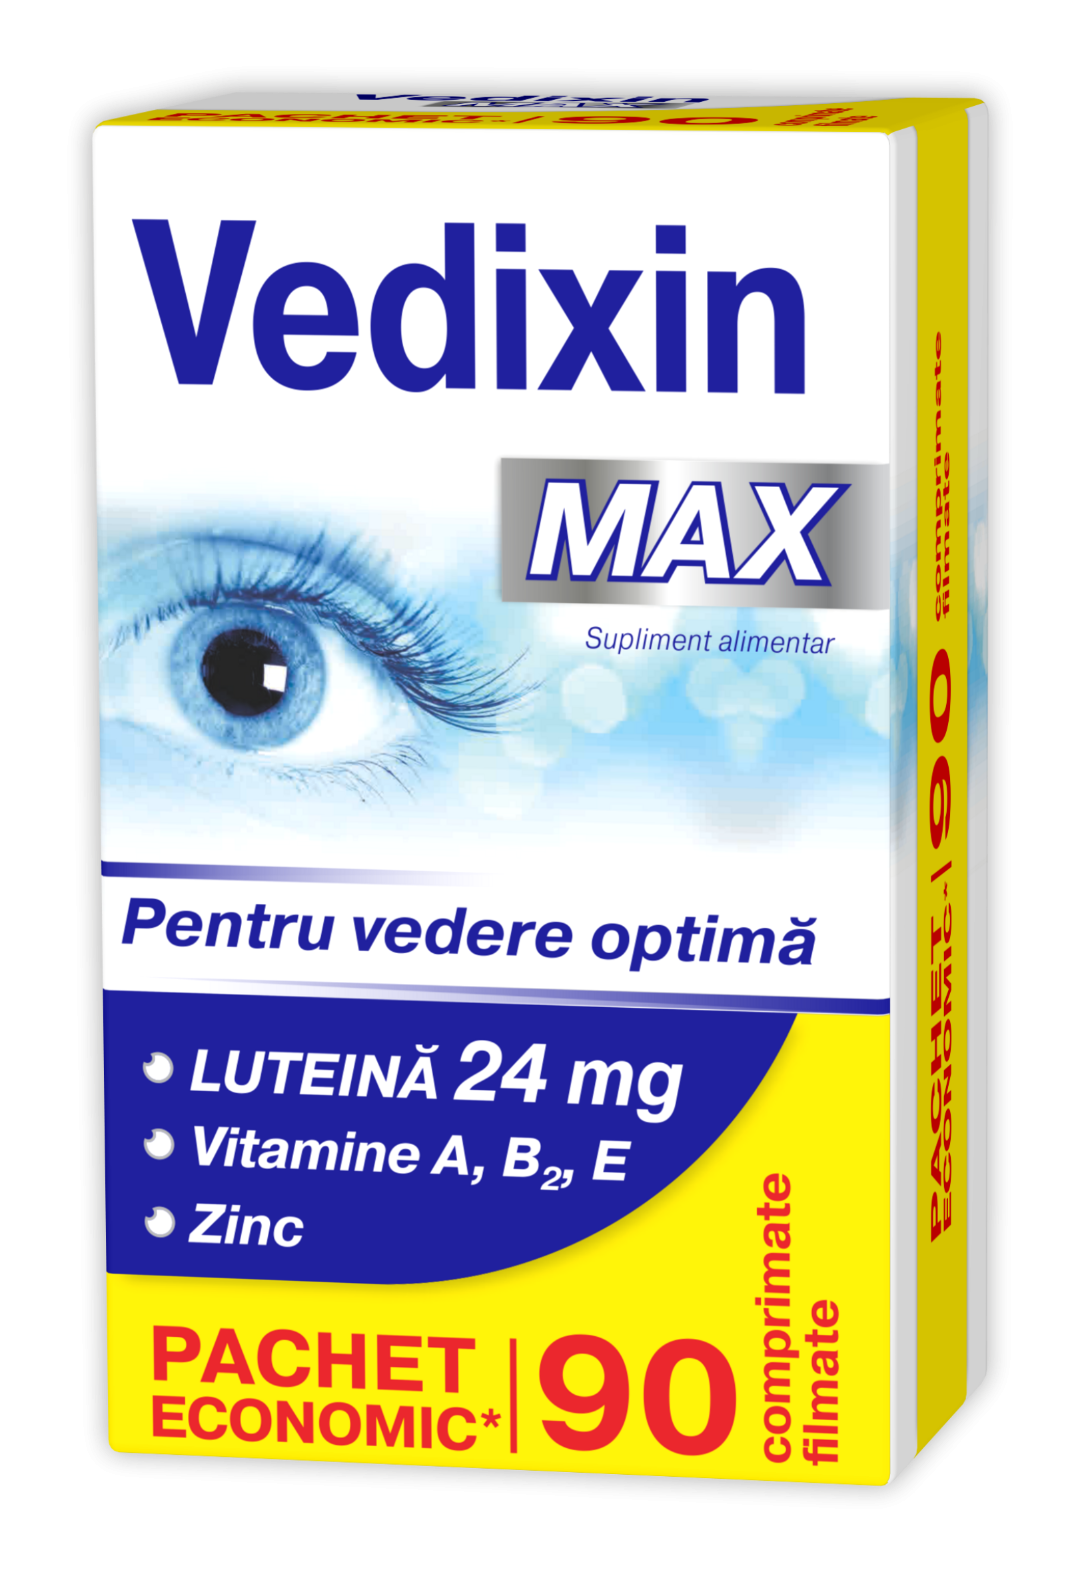 Vitamine și minerale - ZDROVIT VEDIXIN MAX ECONOMIC X 90CPR, axafarm.ro